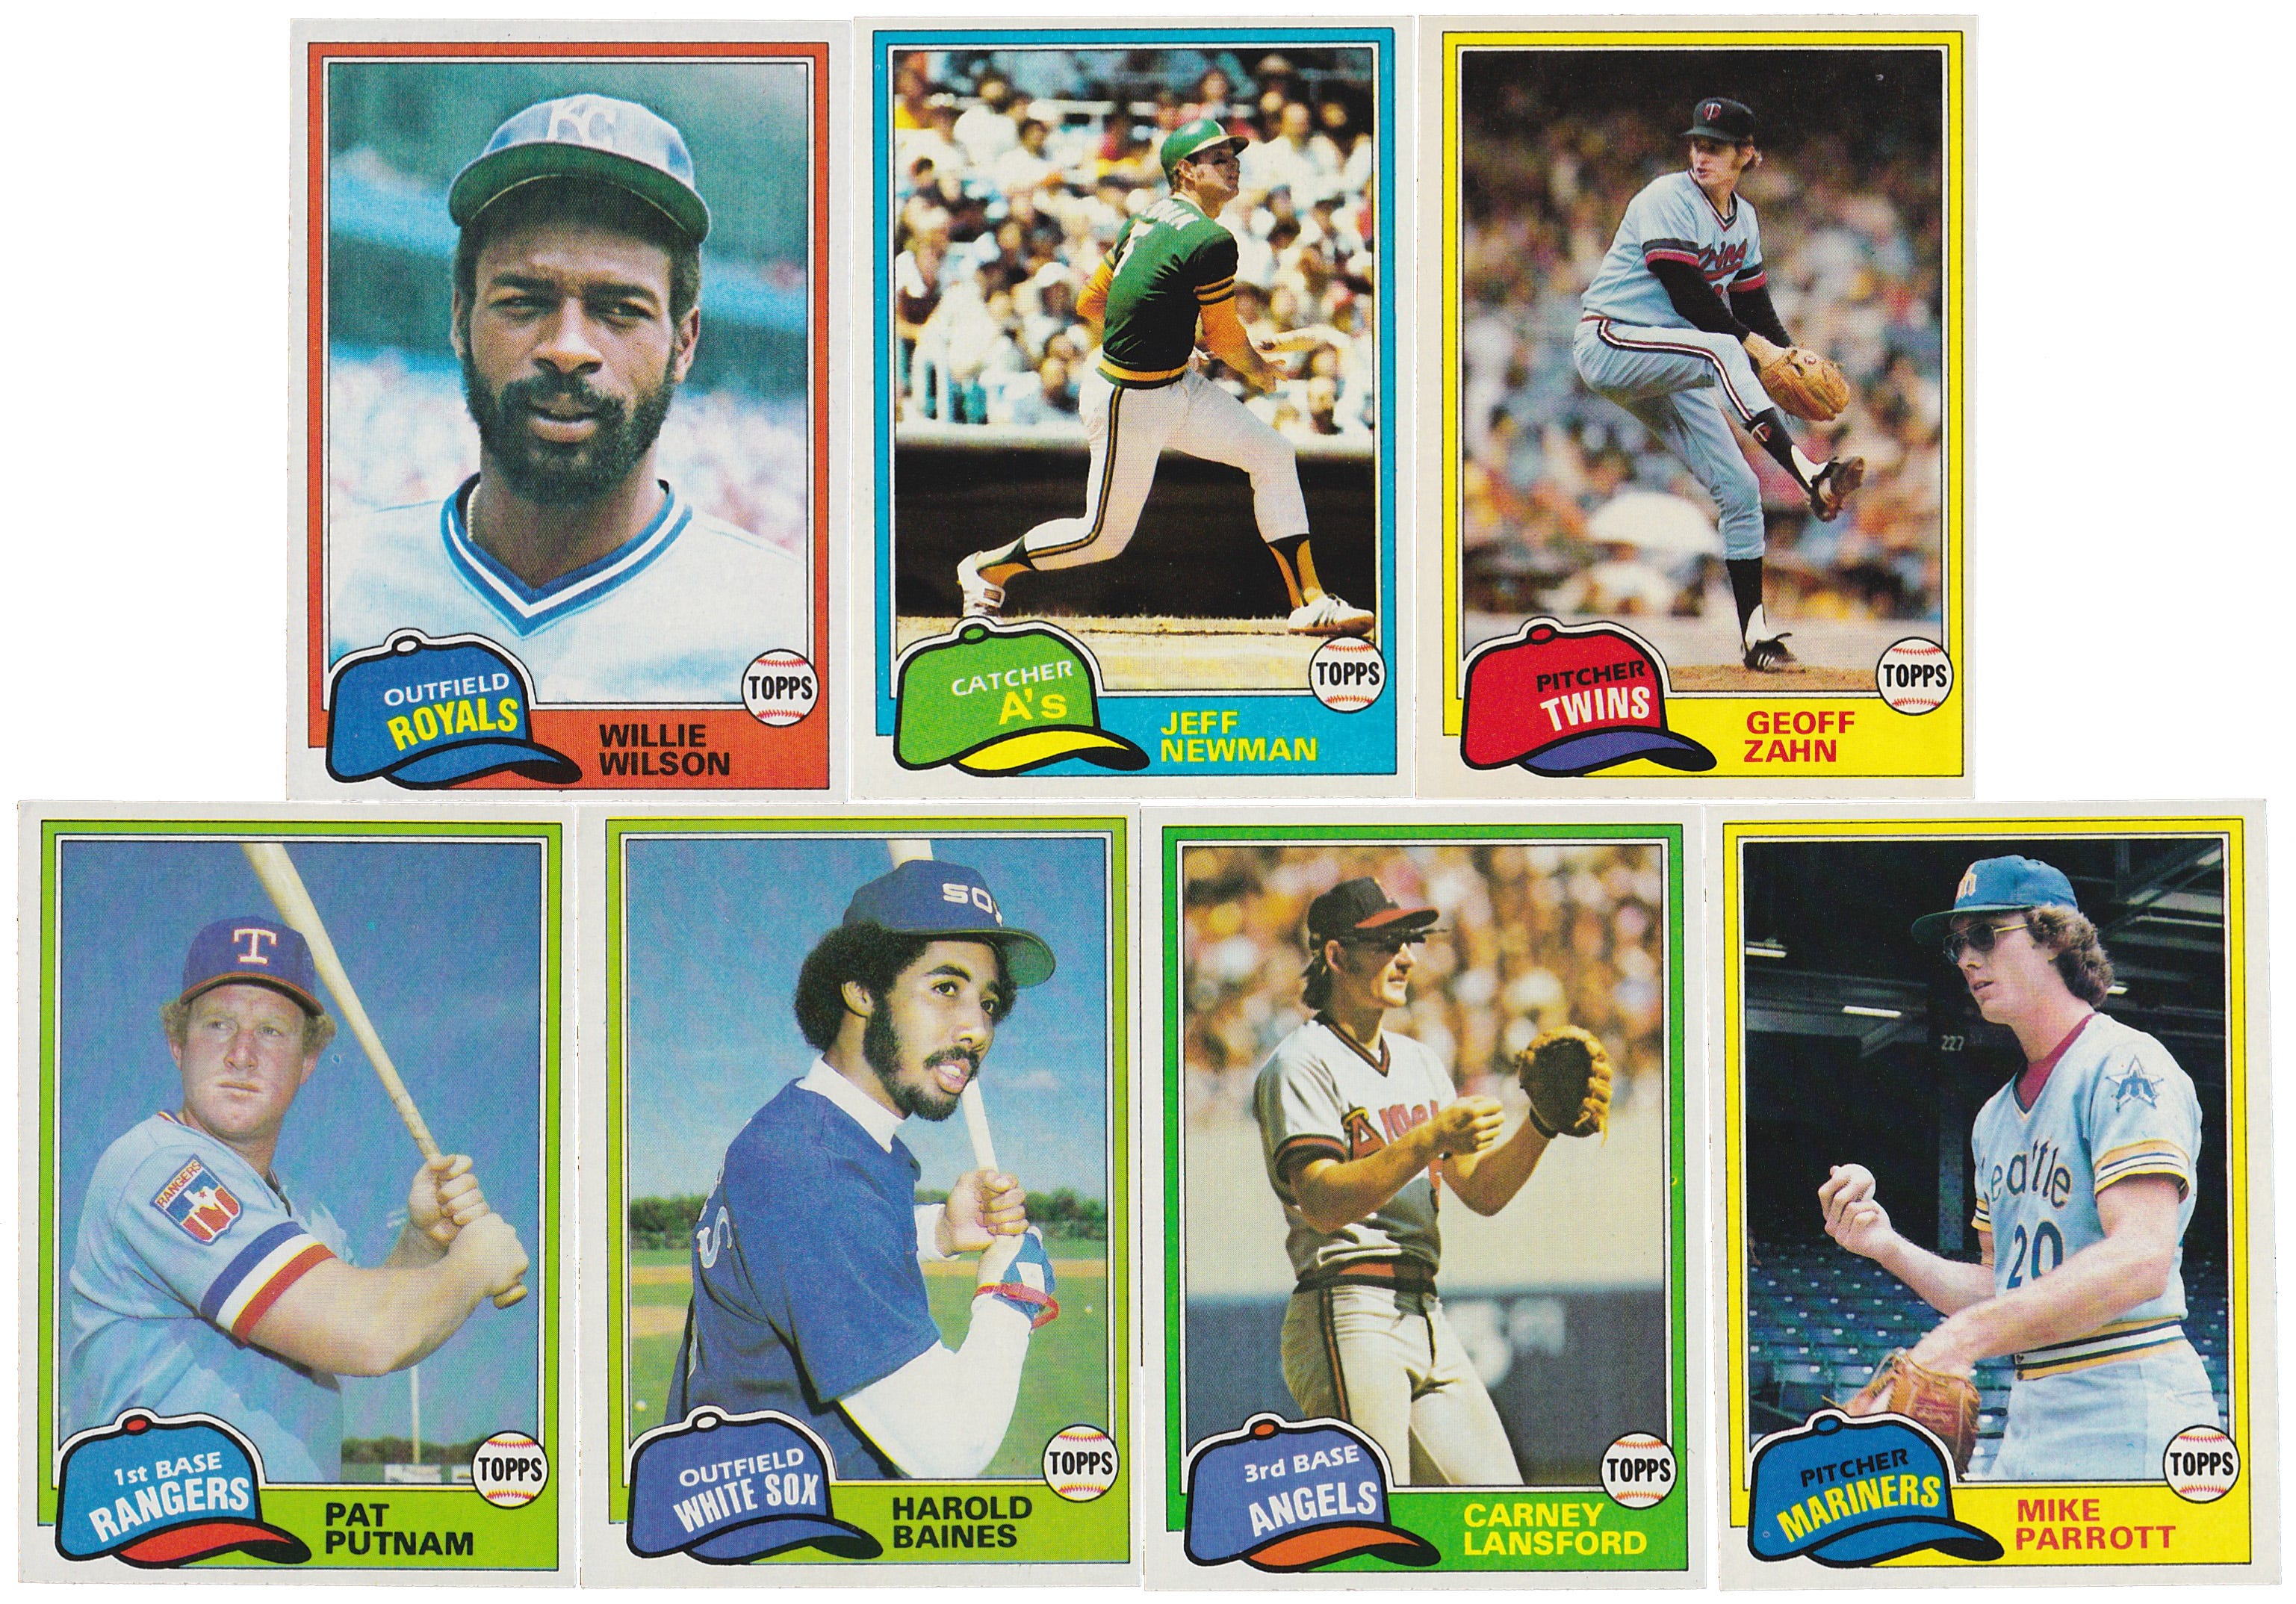  Baseball MLB 1982 Topps #210 Keith Hernandez Cardinals :  Collectibles & Fine Art